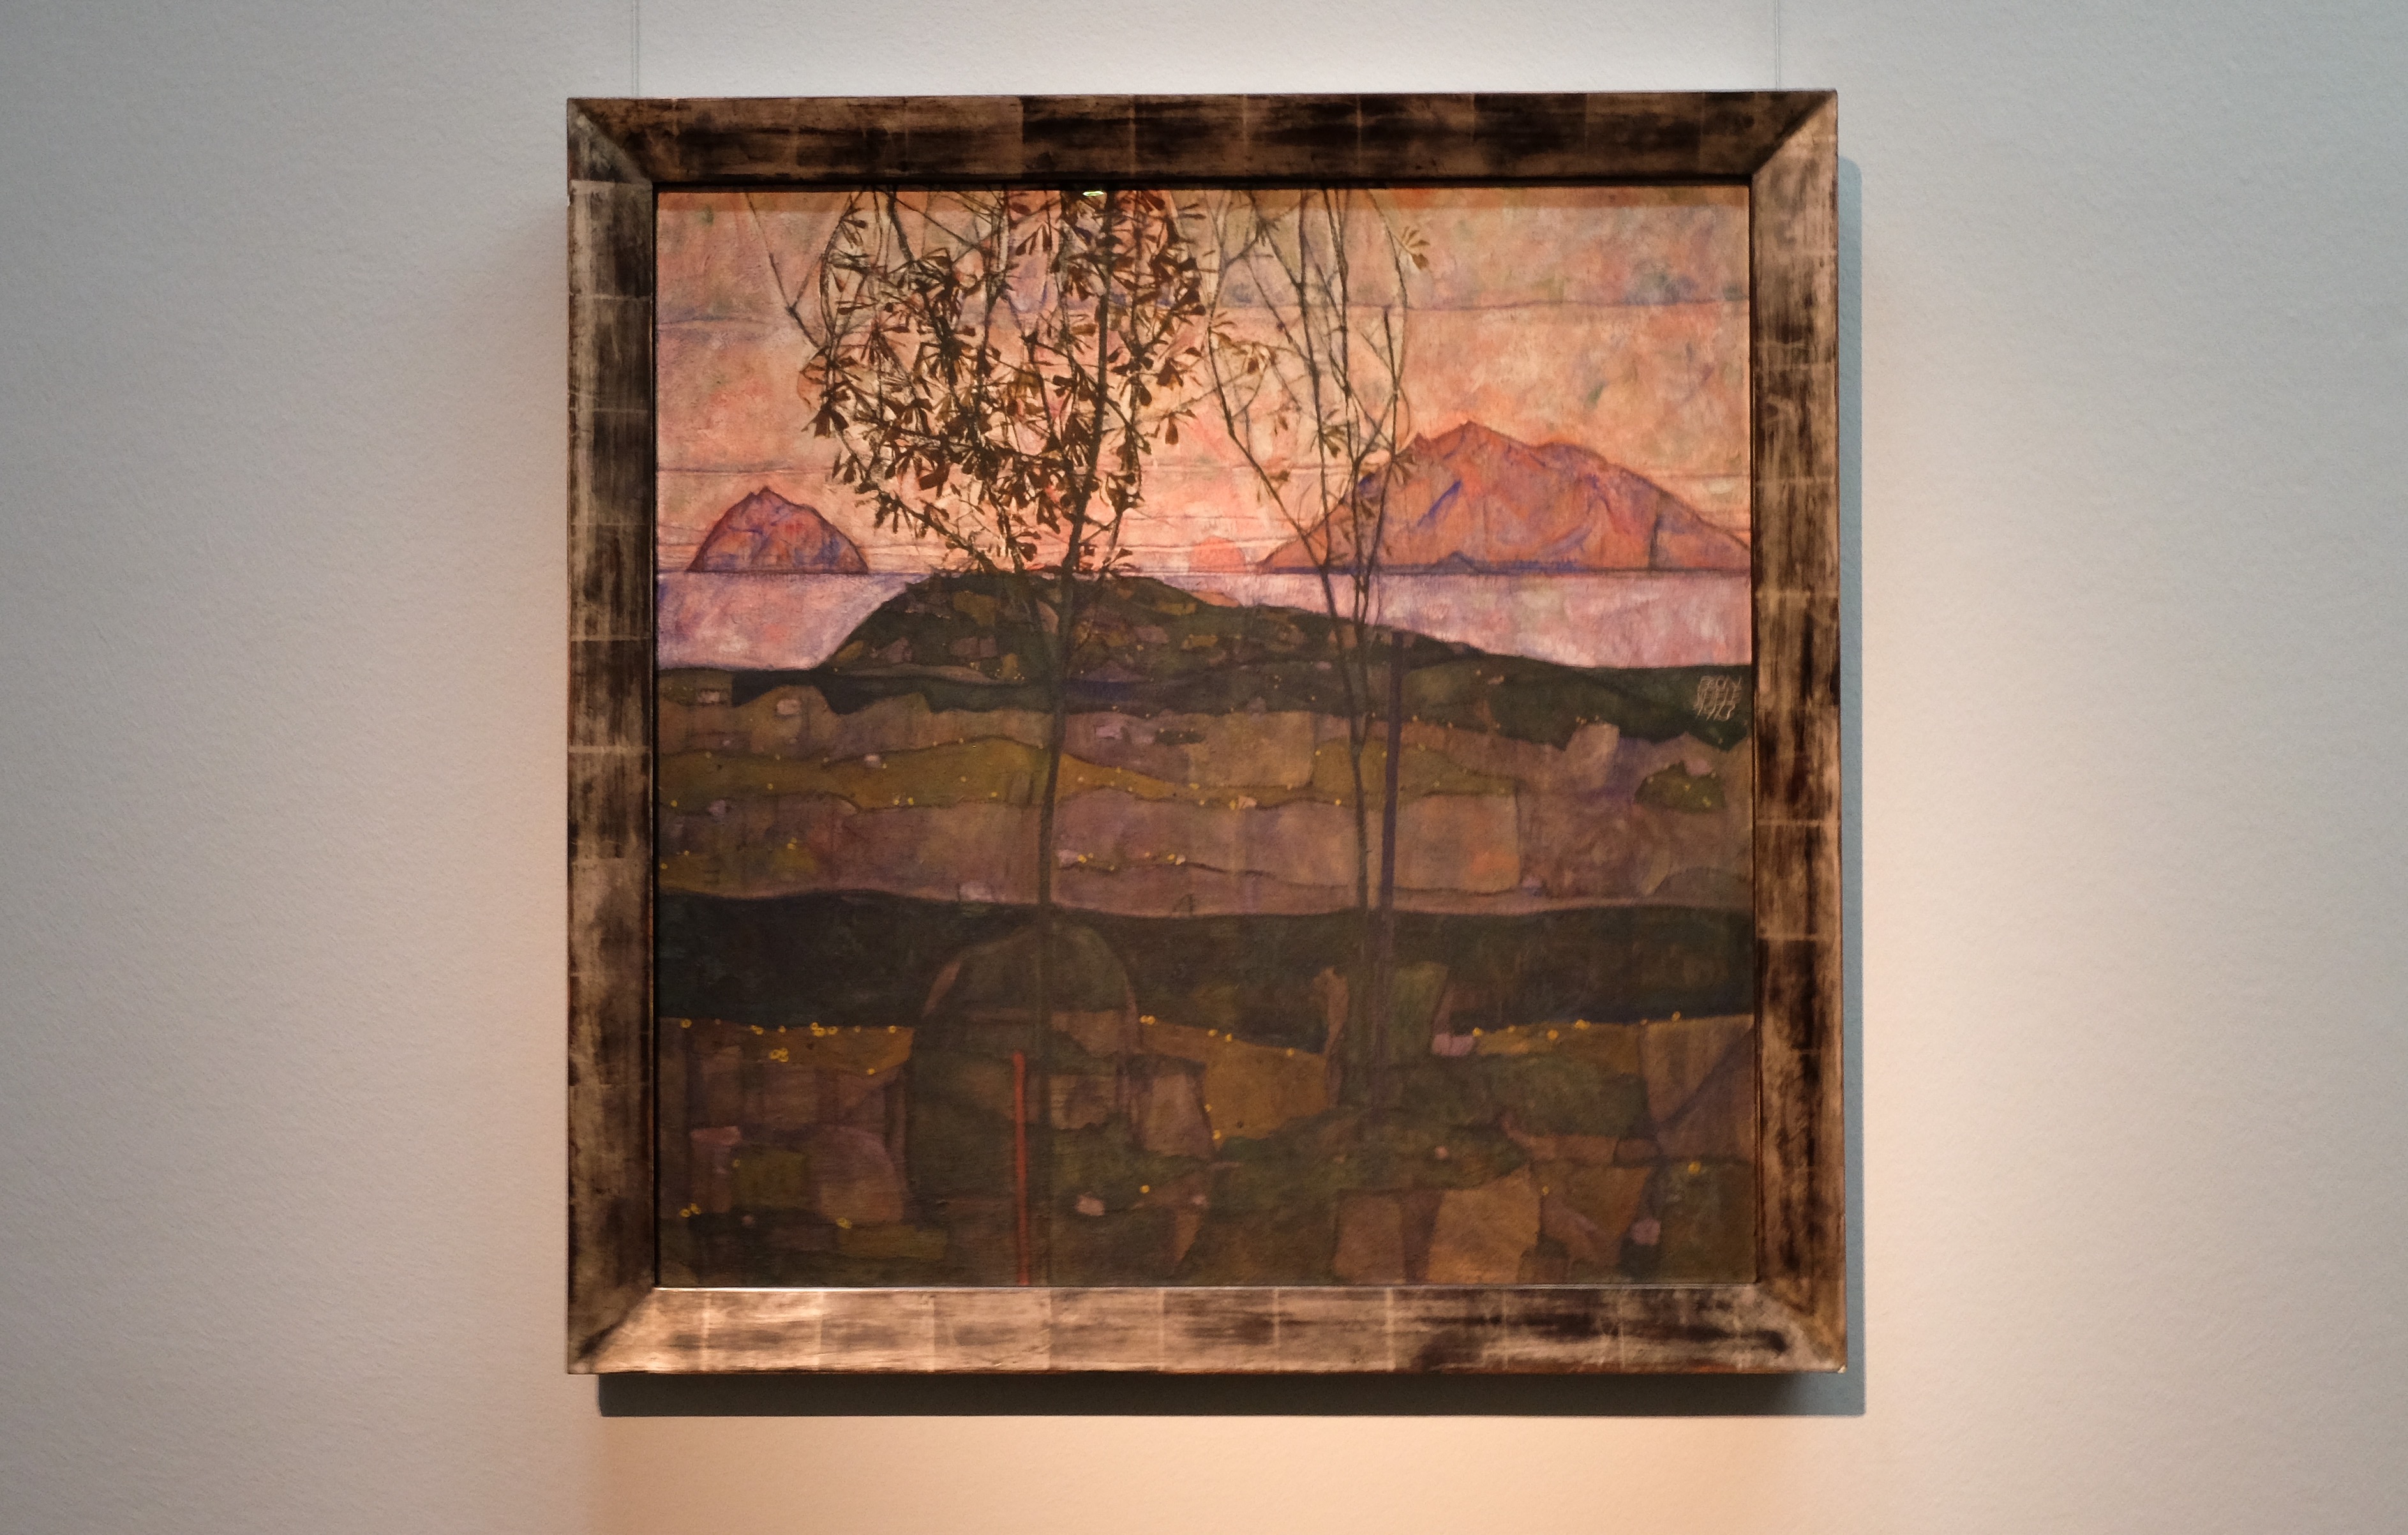 'The Setting Sun' by Egon Schiele